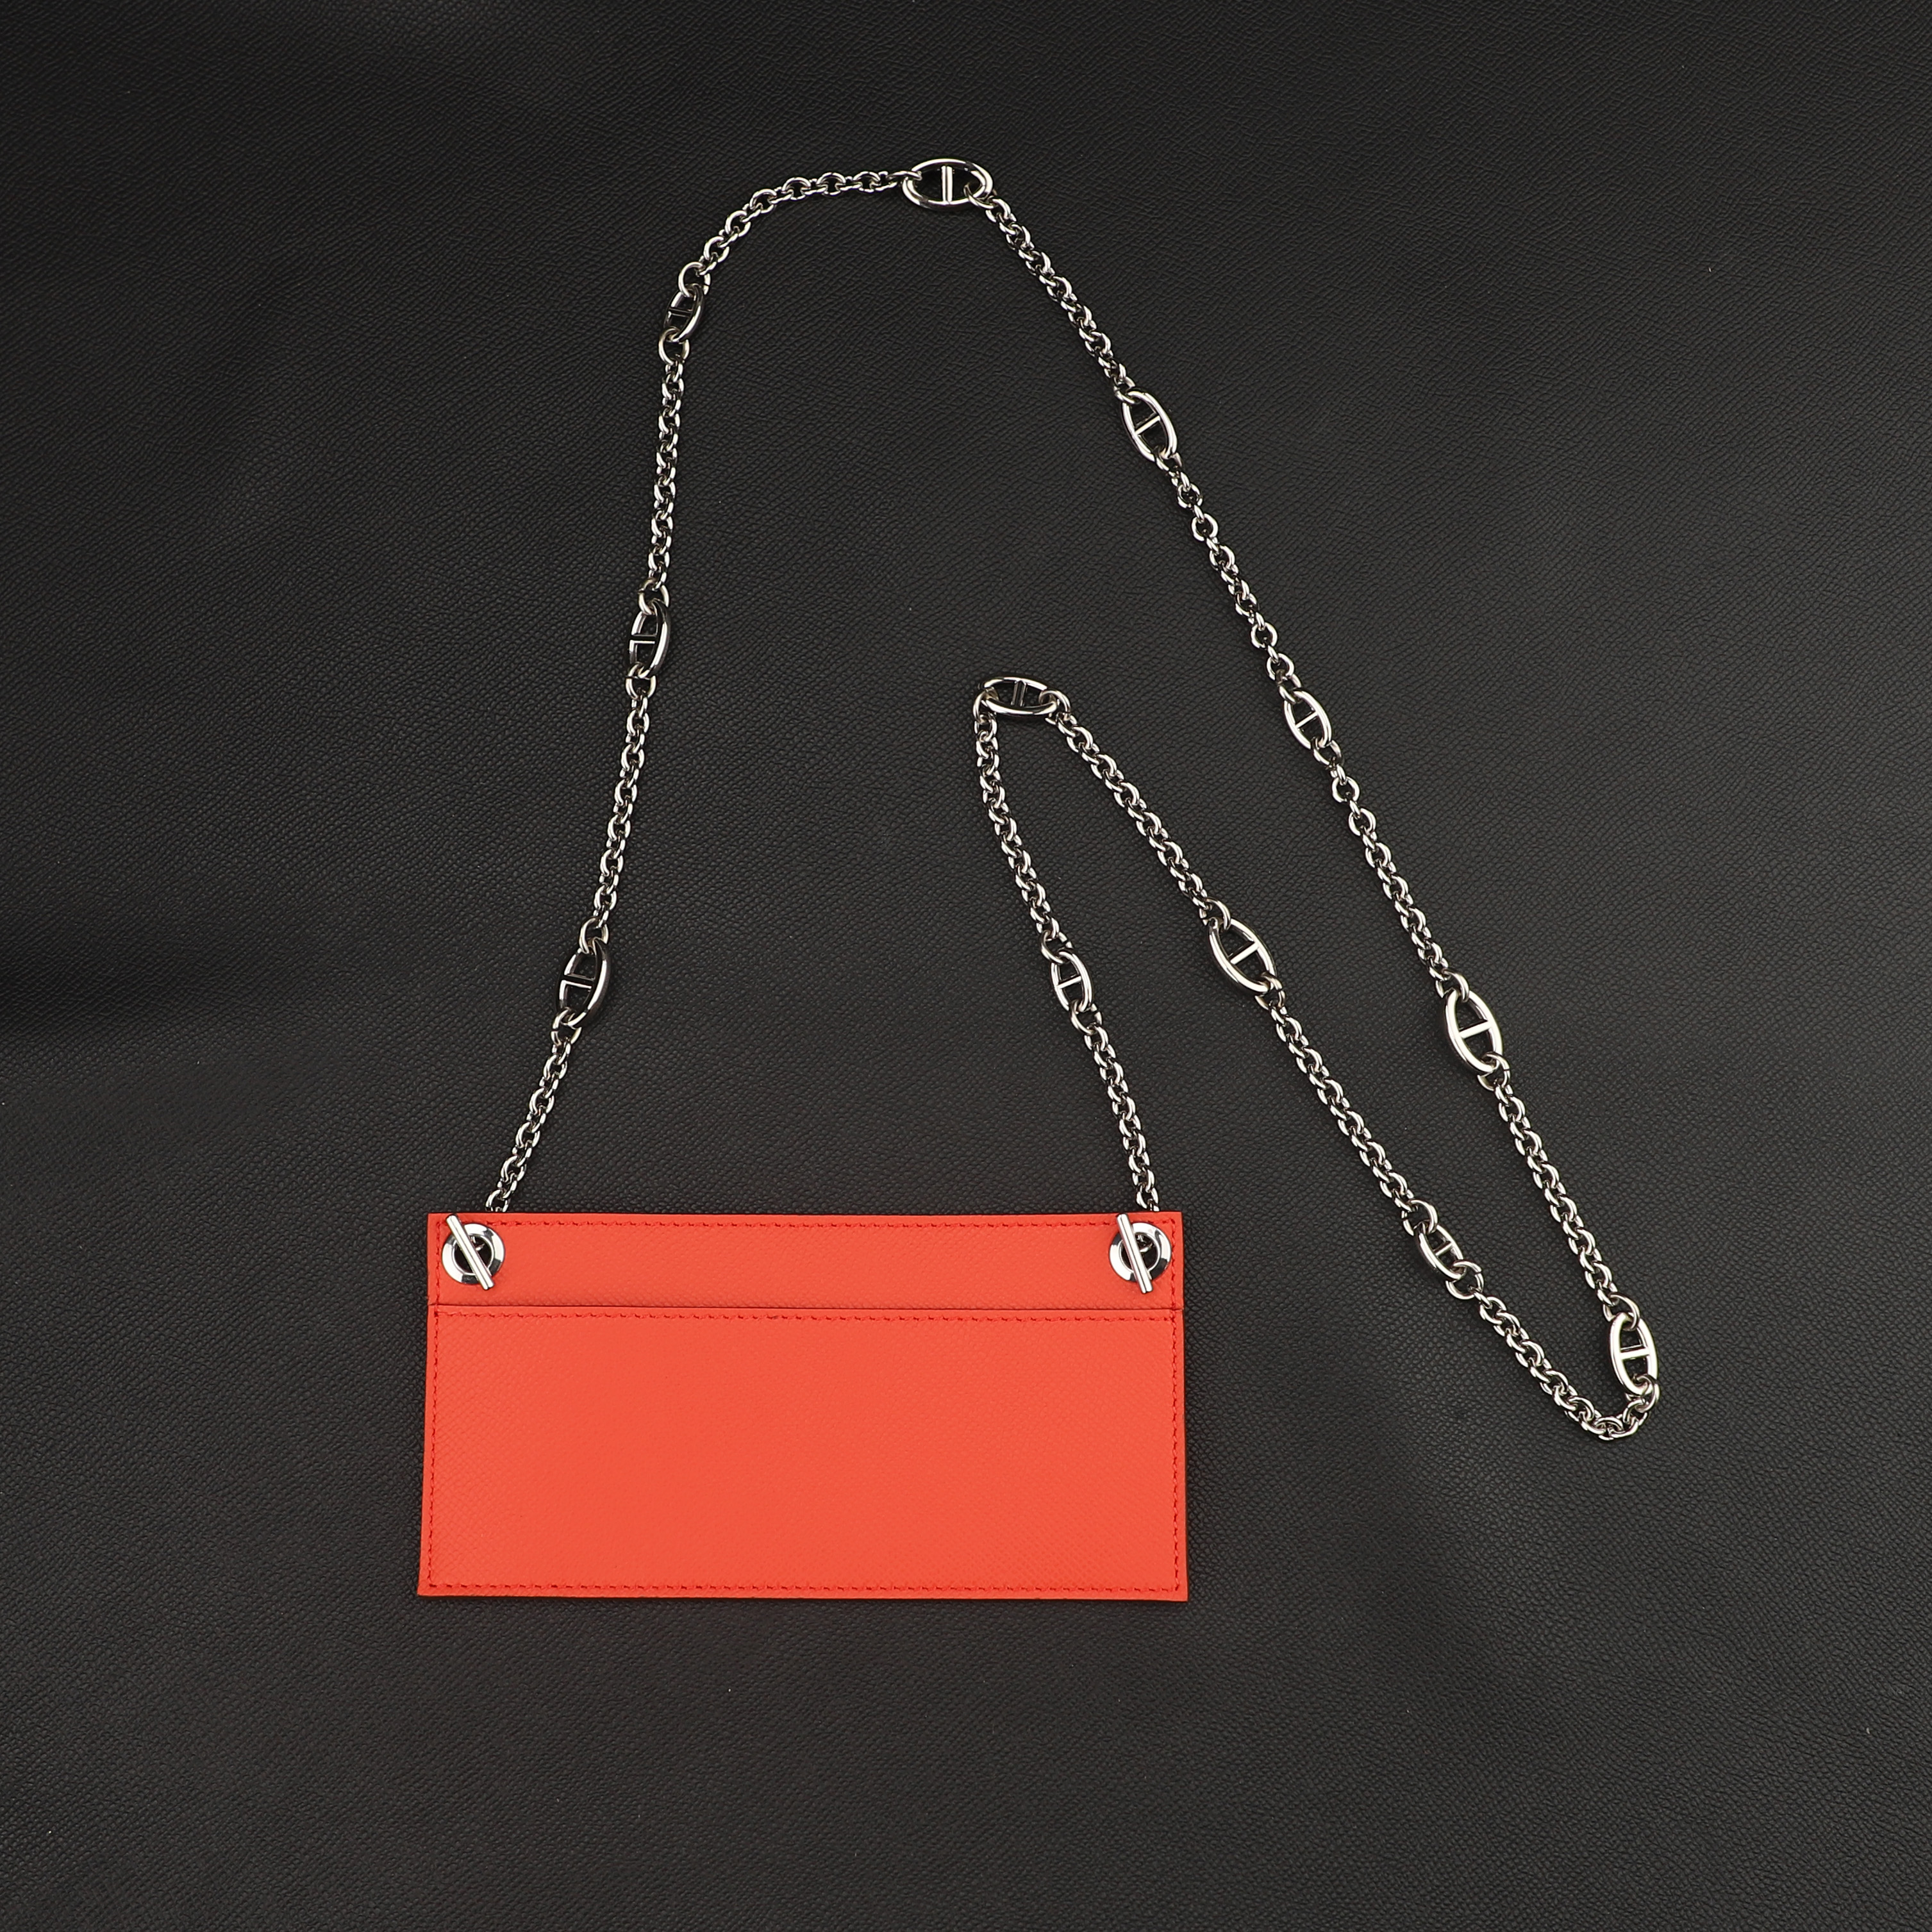 Homyl 40 cm Leather Strap Carry Strap Bag Handle Bag Handle Carry Straps  DIY Replacement Tote Bag Accessories - Khaki, 40 cm